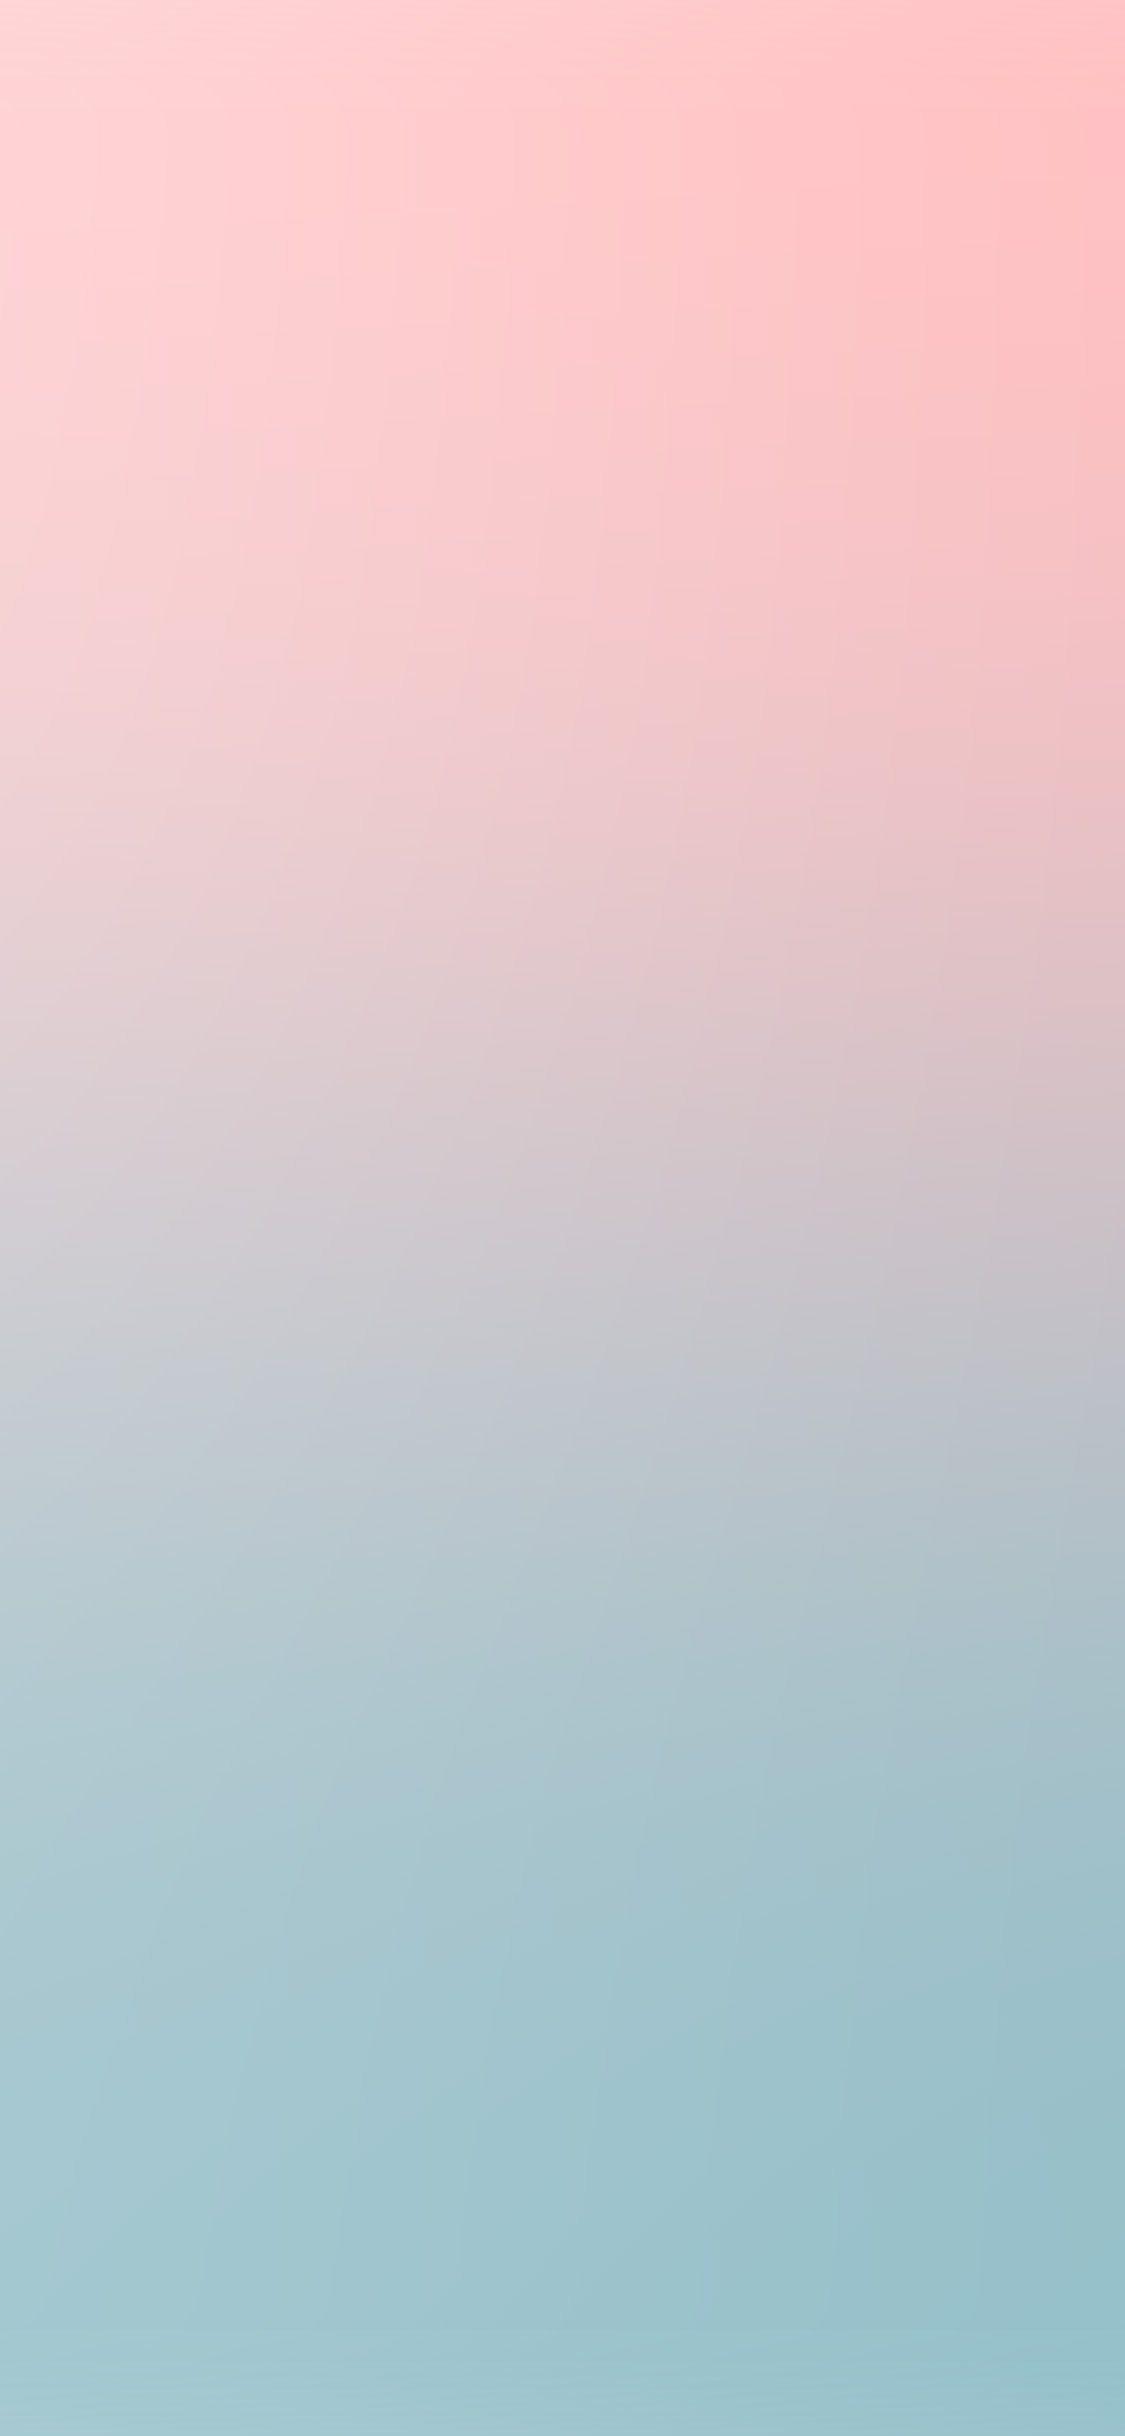 iPhoneX wallpaper: pink blue soft pastel blur gradation